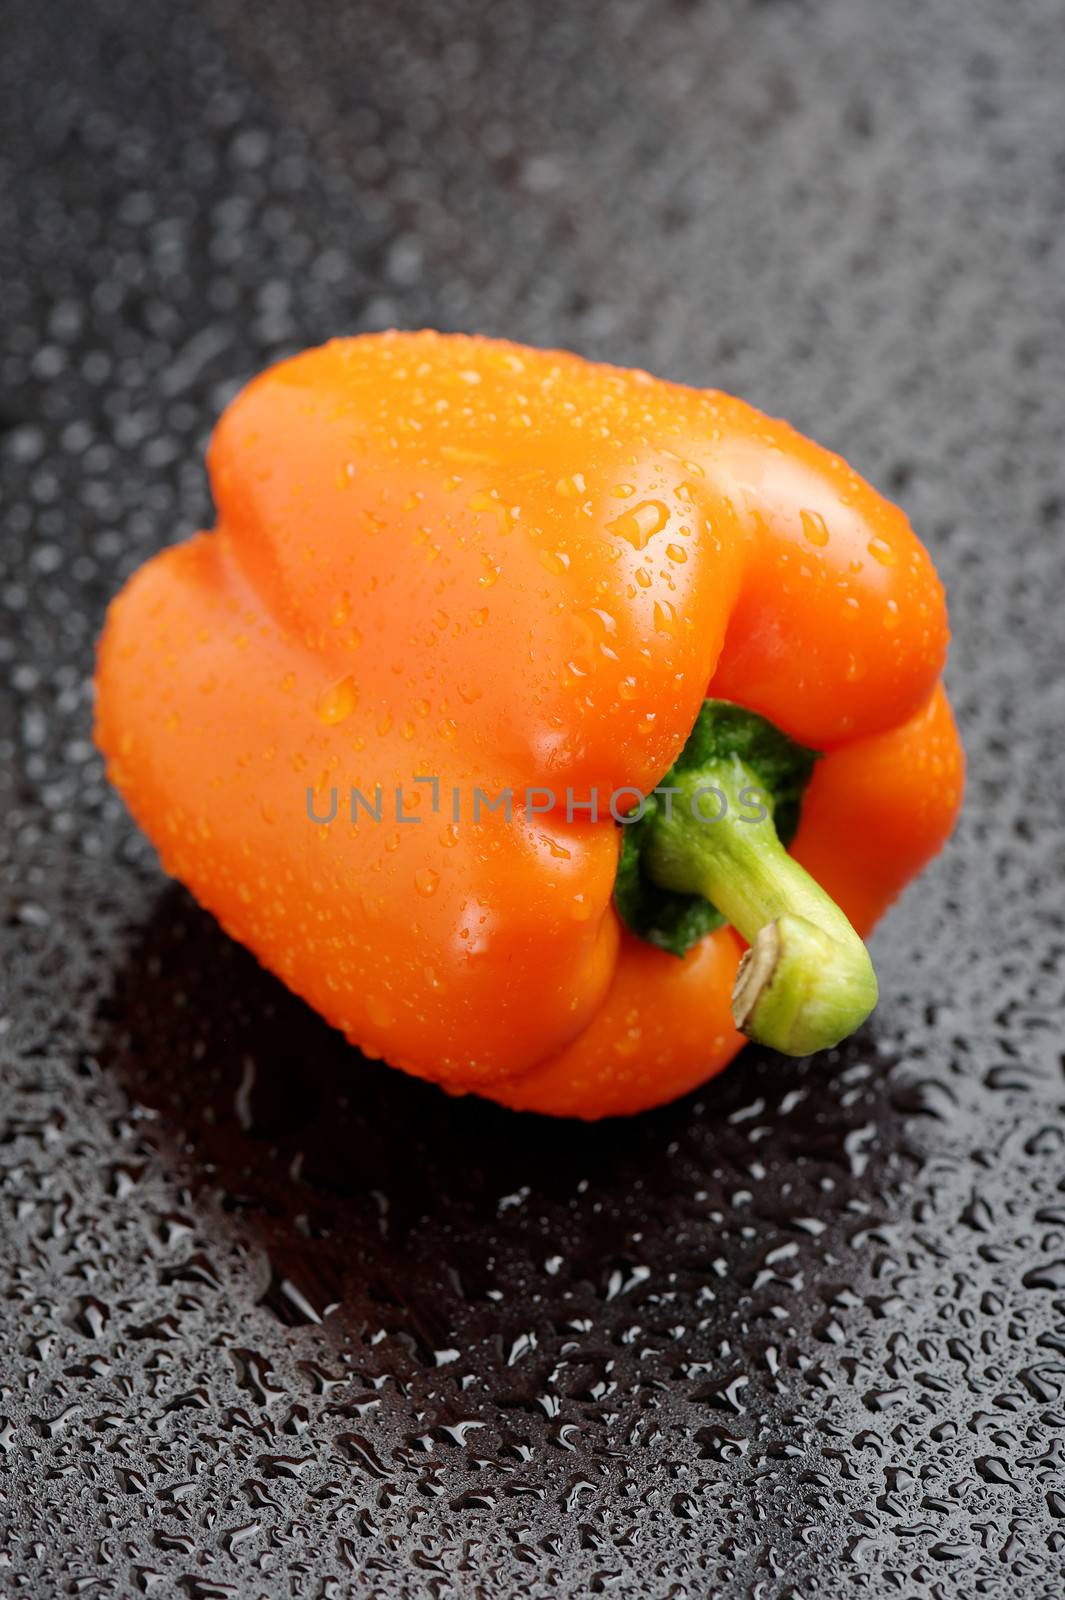 Orange bell pepper on black table after rain